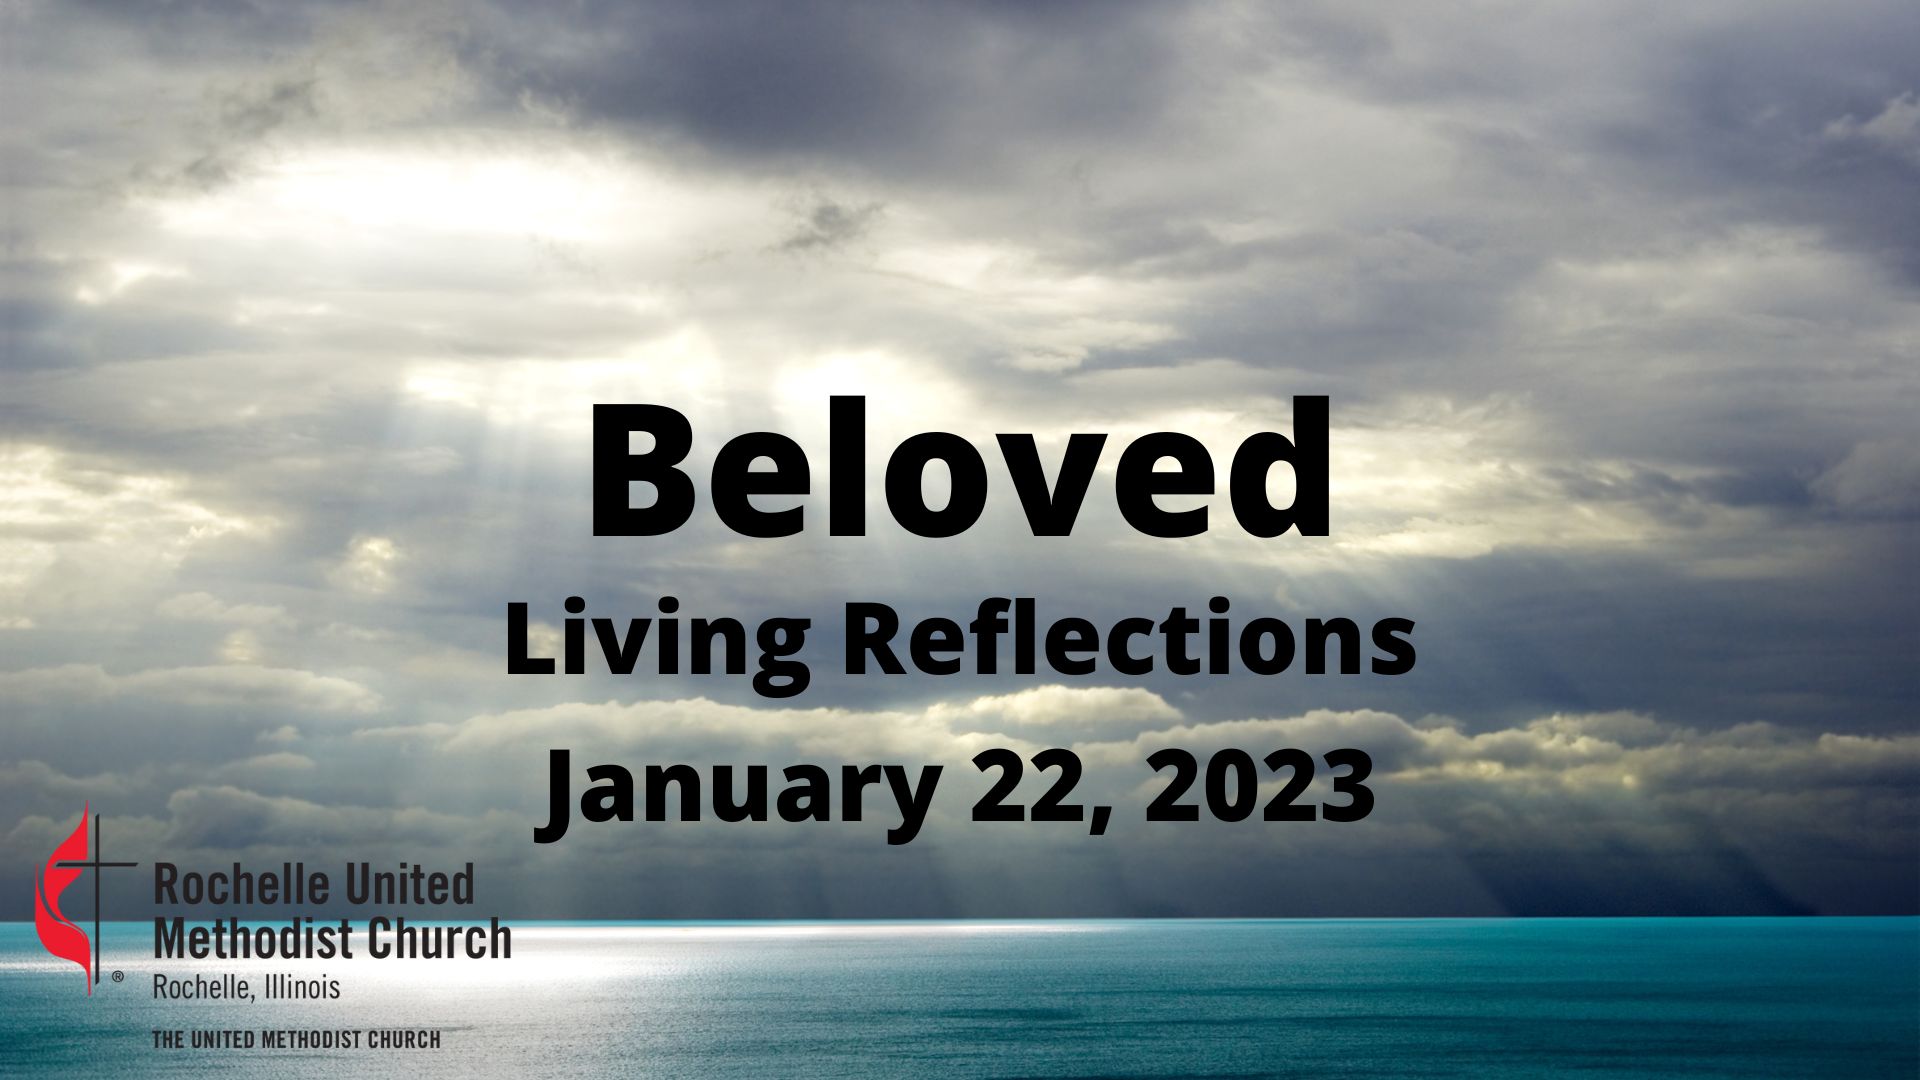 Beloved Living Reflections